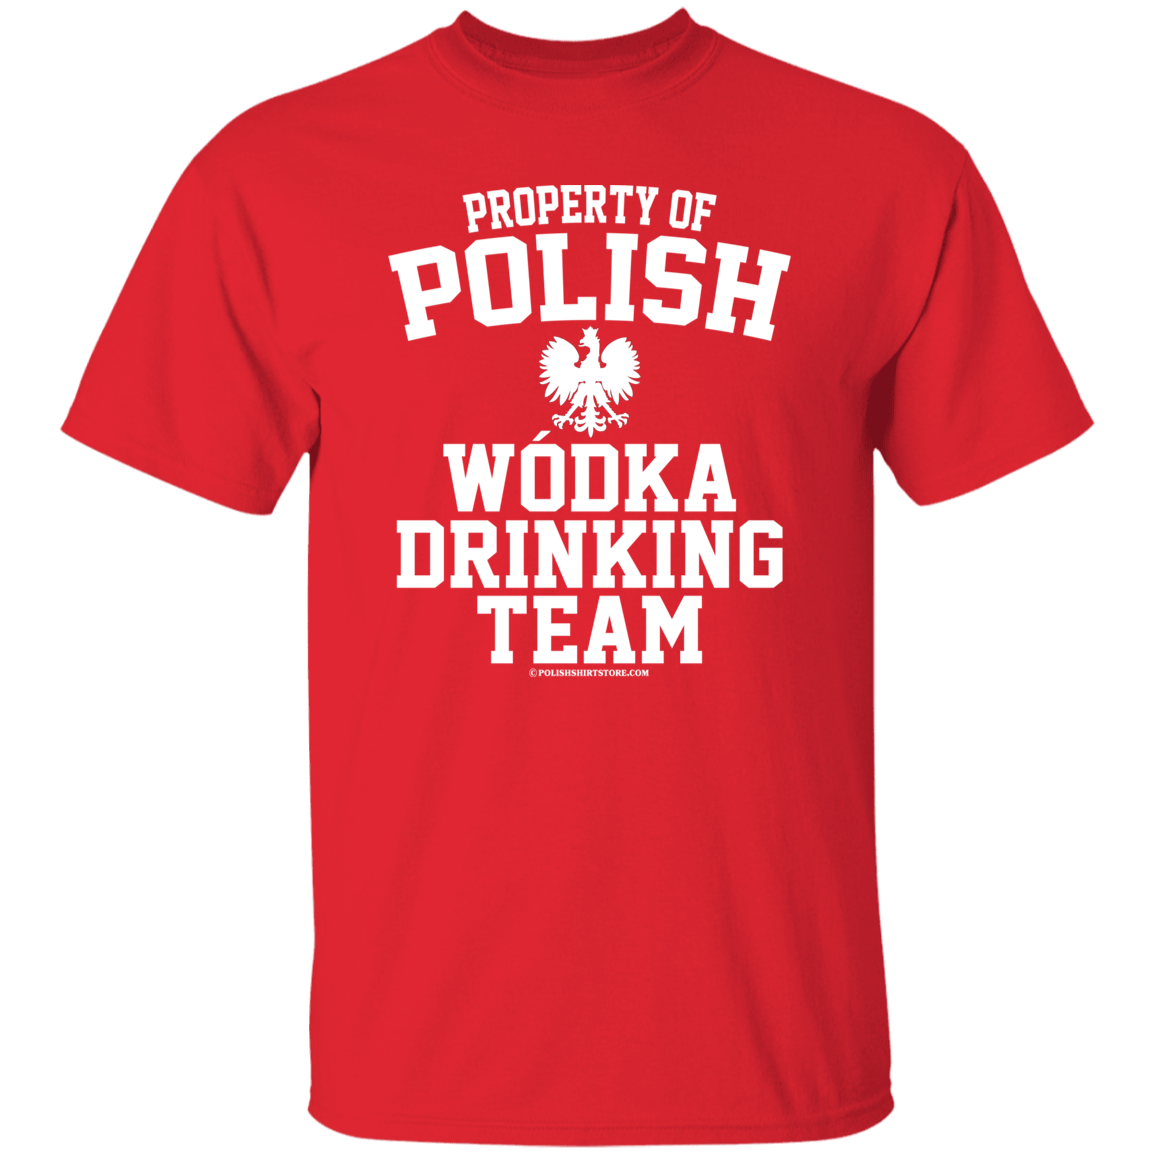 Property of Polish Wodka Drinking Team Apparel CustomCat G500 5.3 oz. T-Shirt Red S